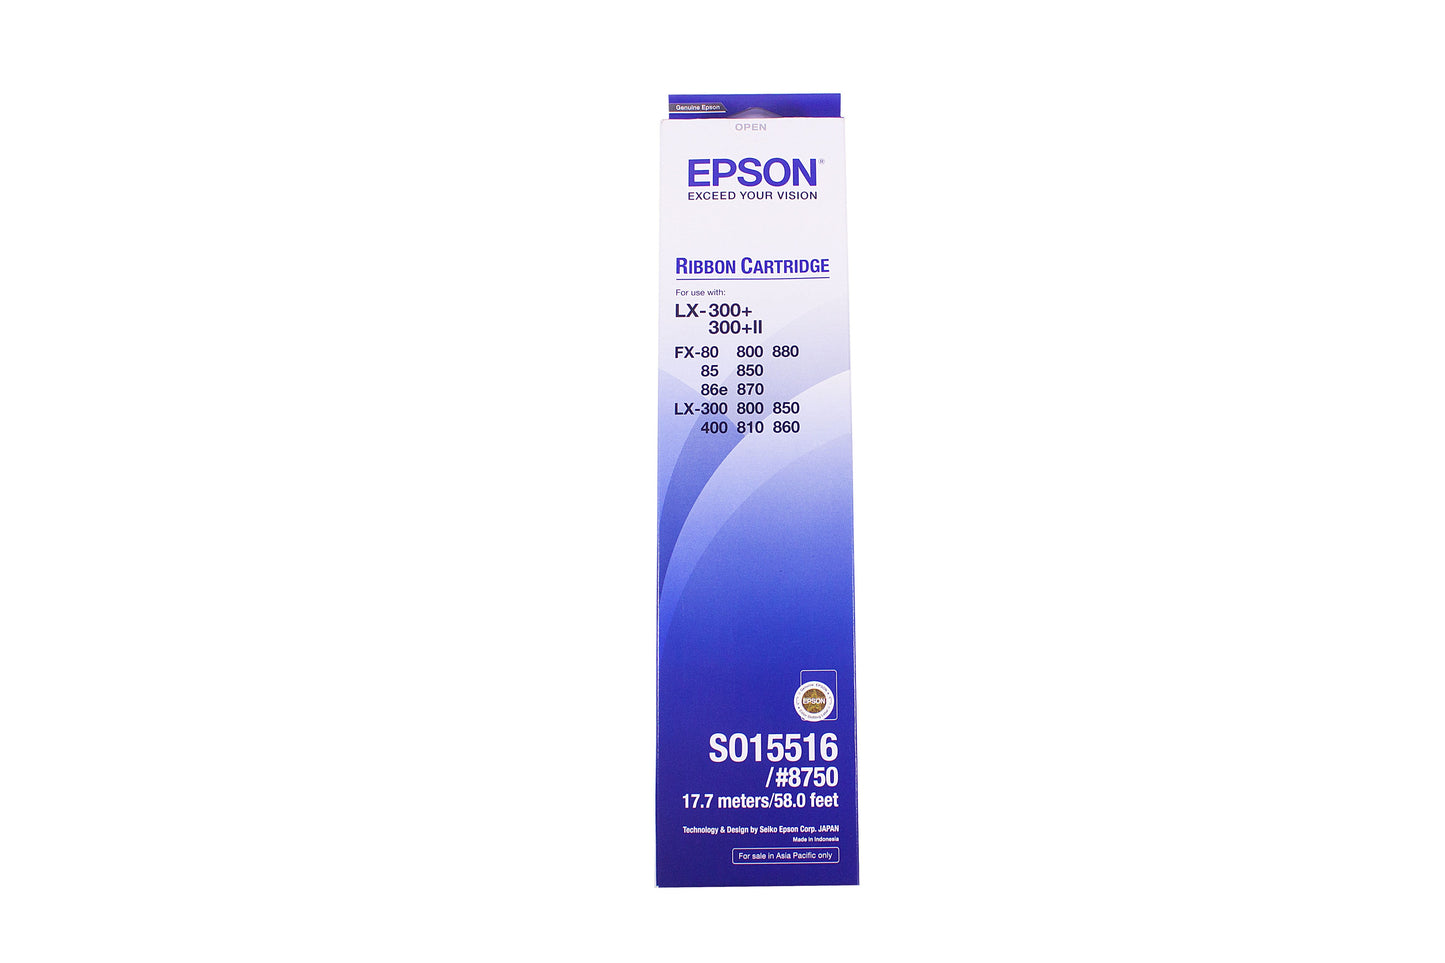 Epson Ribbon Cartridge LX-300